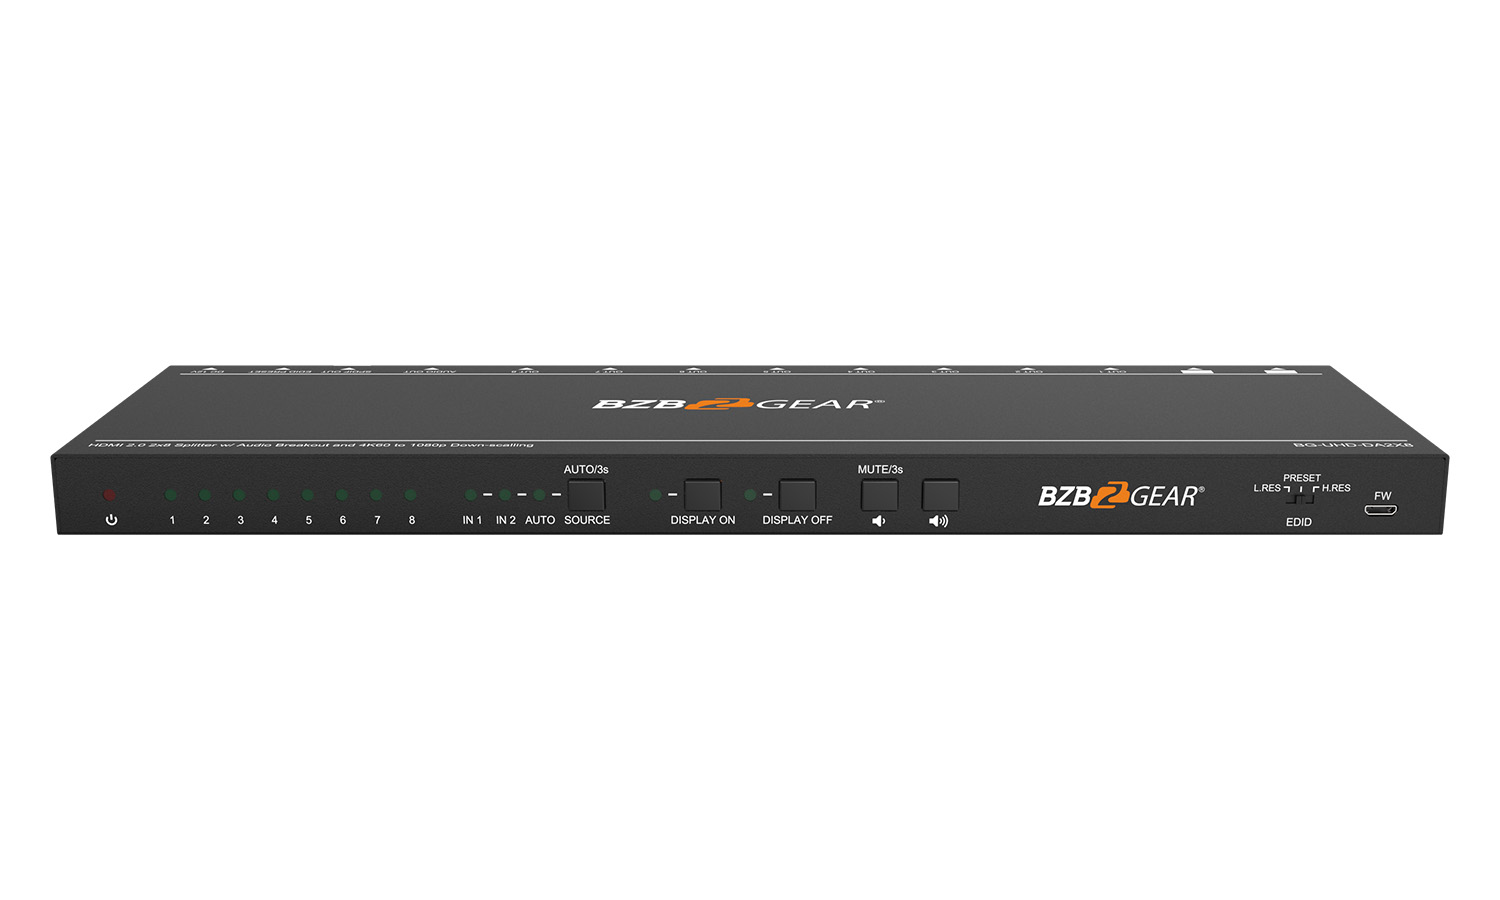 BG-UHD-DA2X8 1X8 HDMI 4K Splitter/Distribution Amplifier w/CEC Turn On/Off TV by BZBGEAR